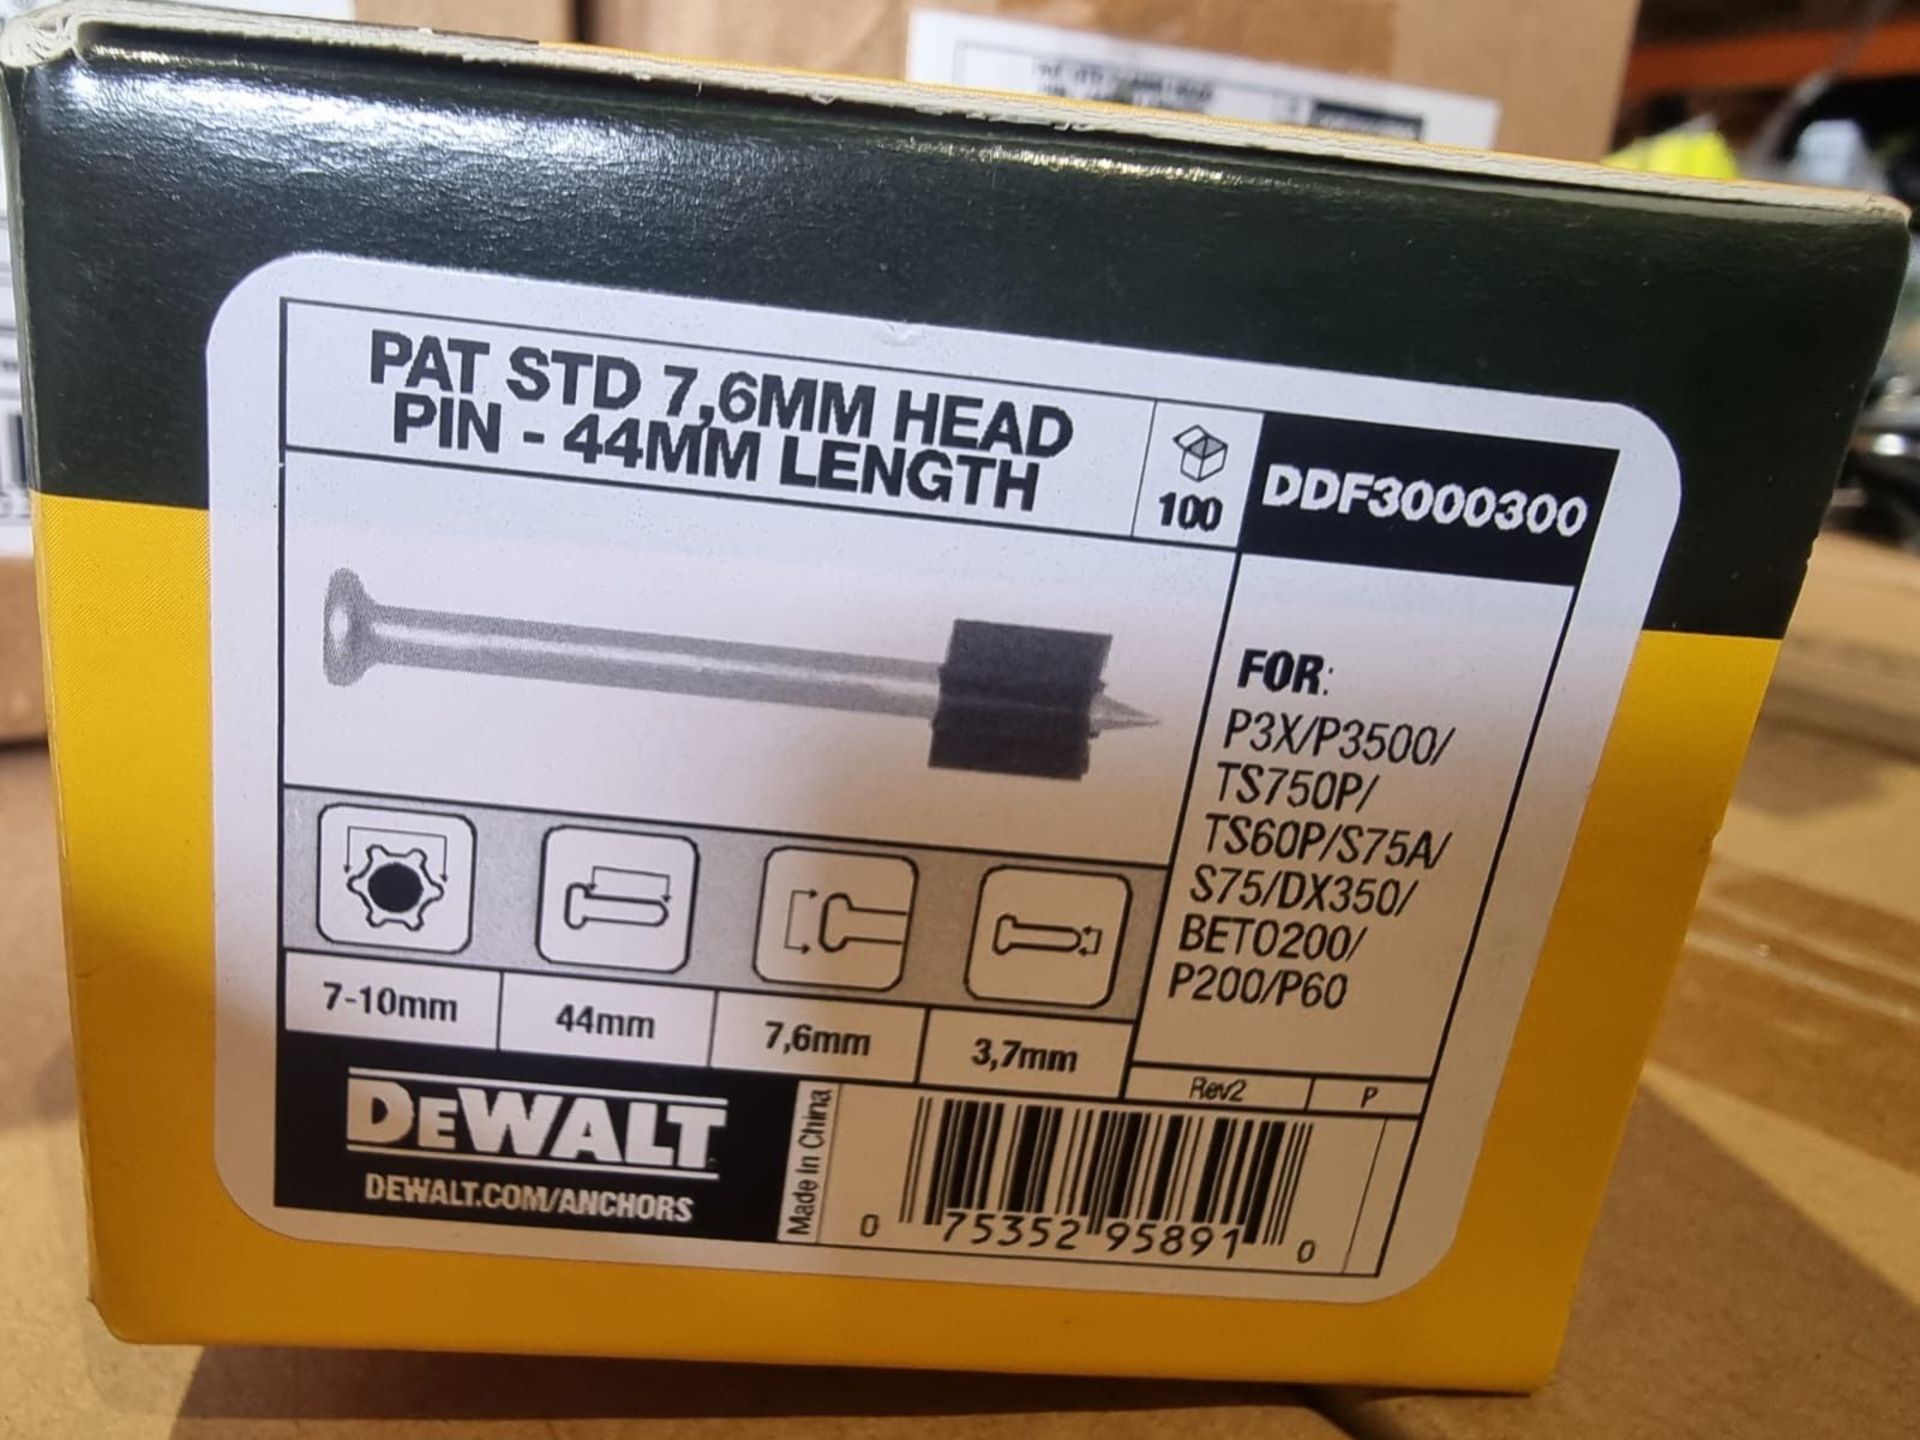 Trade Lot 60 x New Boxes of 100 Dewalt PAT Std 7,6mm Head Pin - 44mm Length DDF3000300Universal - Image 3 of 3